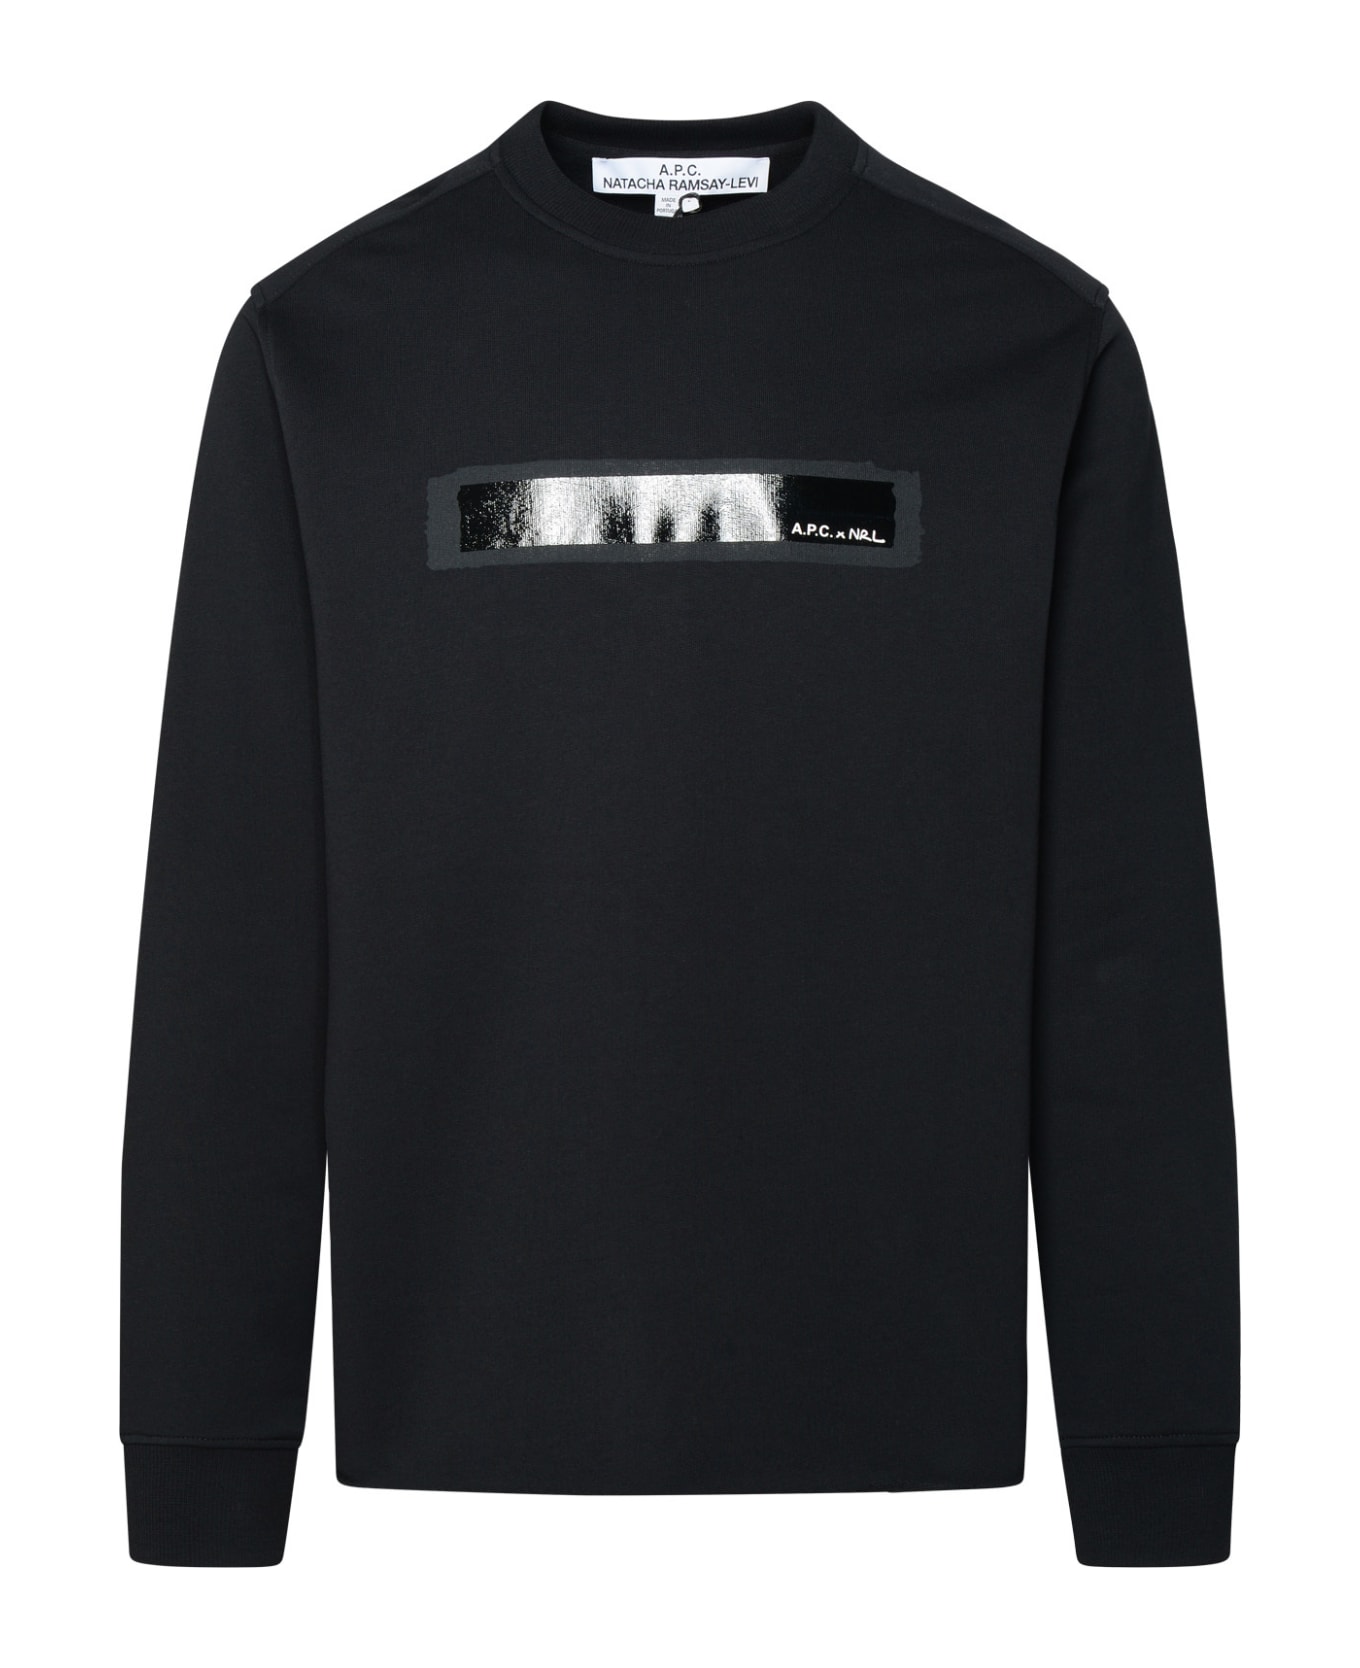 A.P.C. Black Cotton Sweatshirt - Black